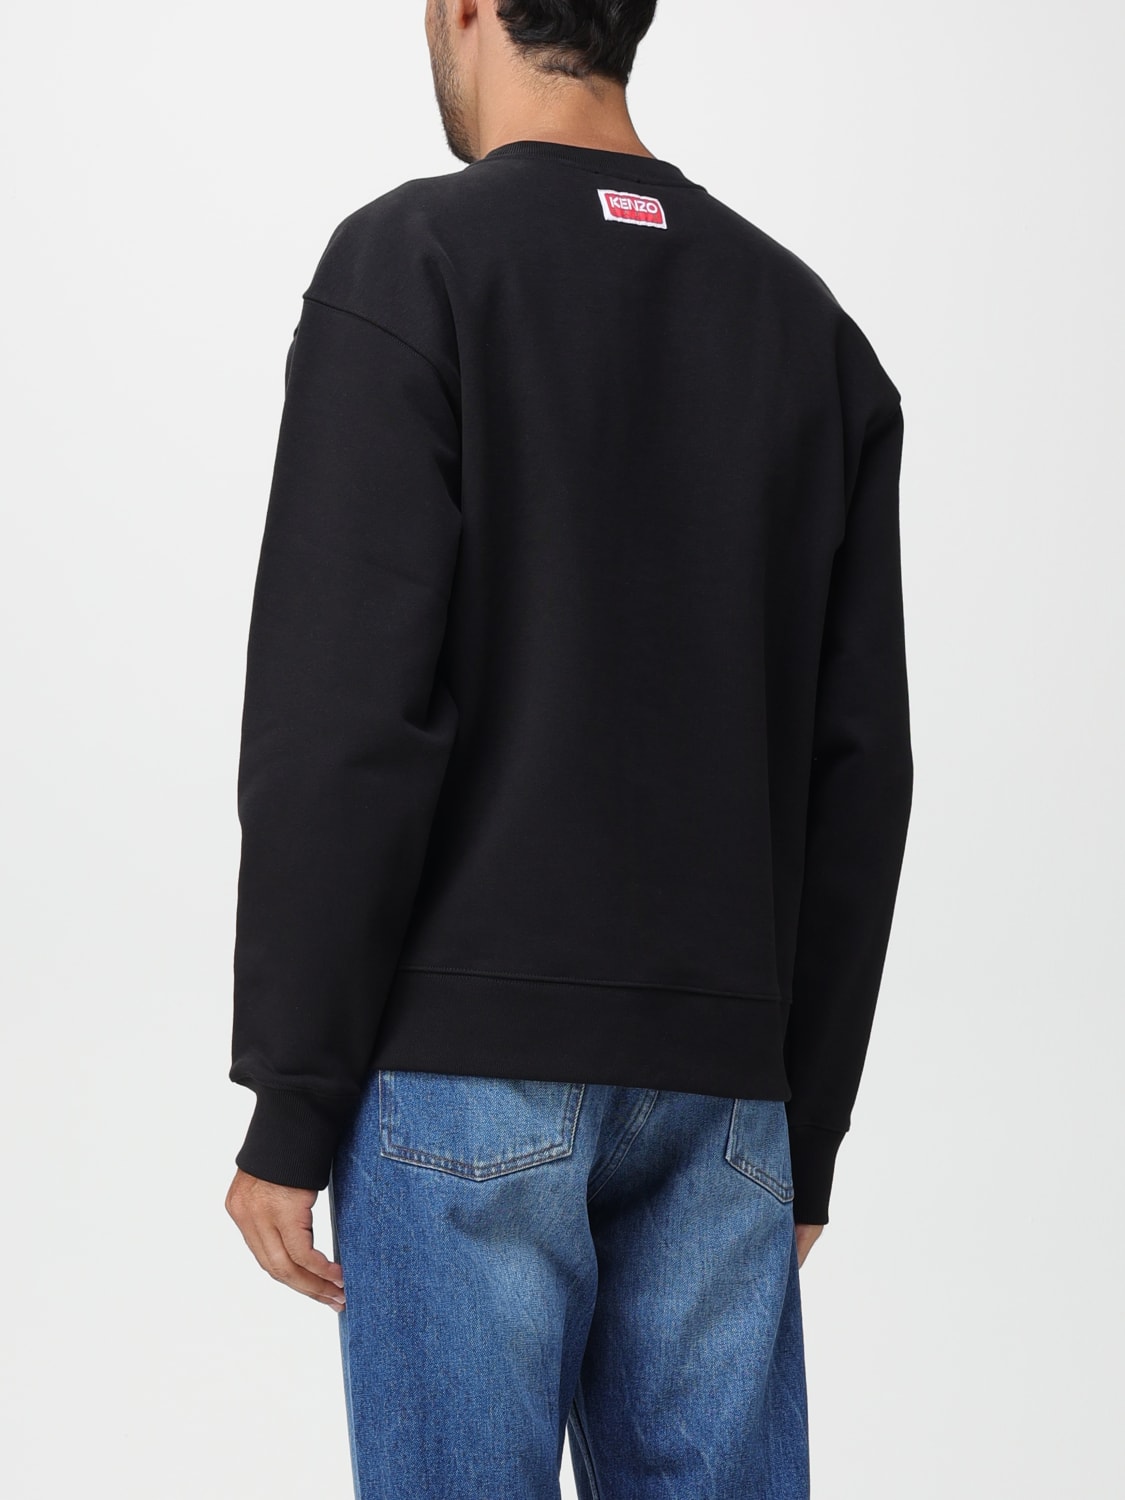 KENZO: Boke Flower sweatshirt in cotton - Black | Kenzo sweatshirt ...